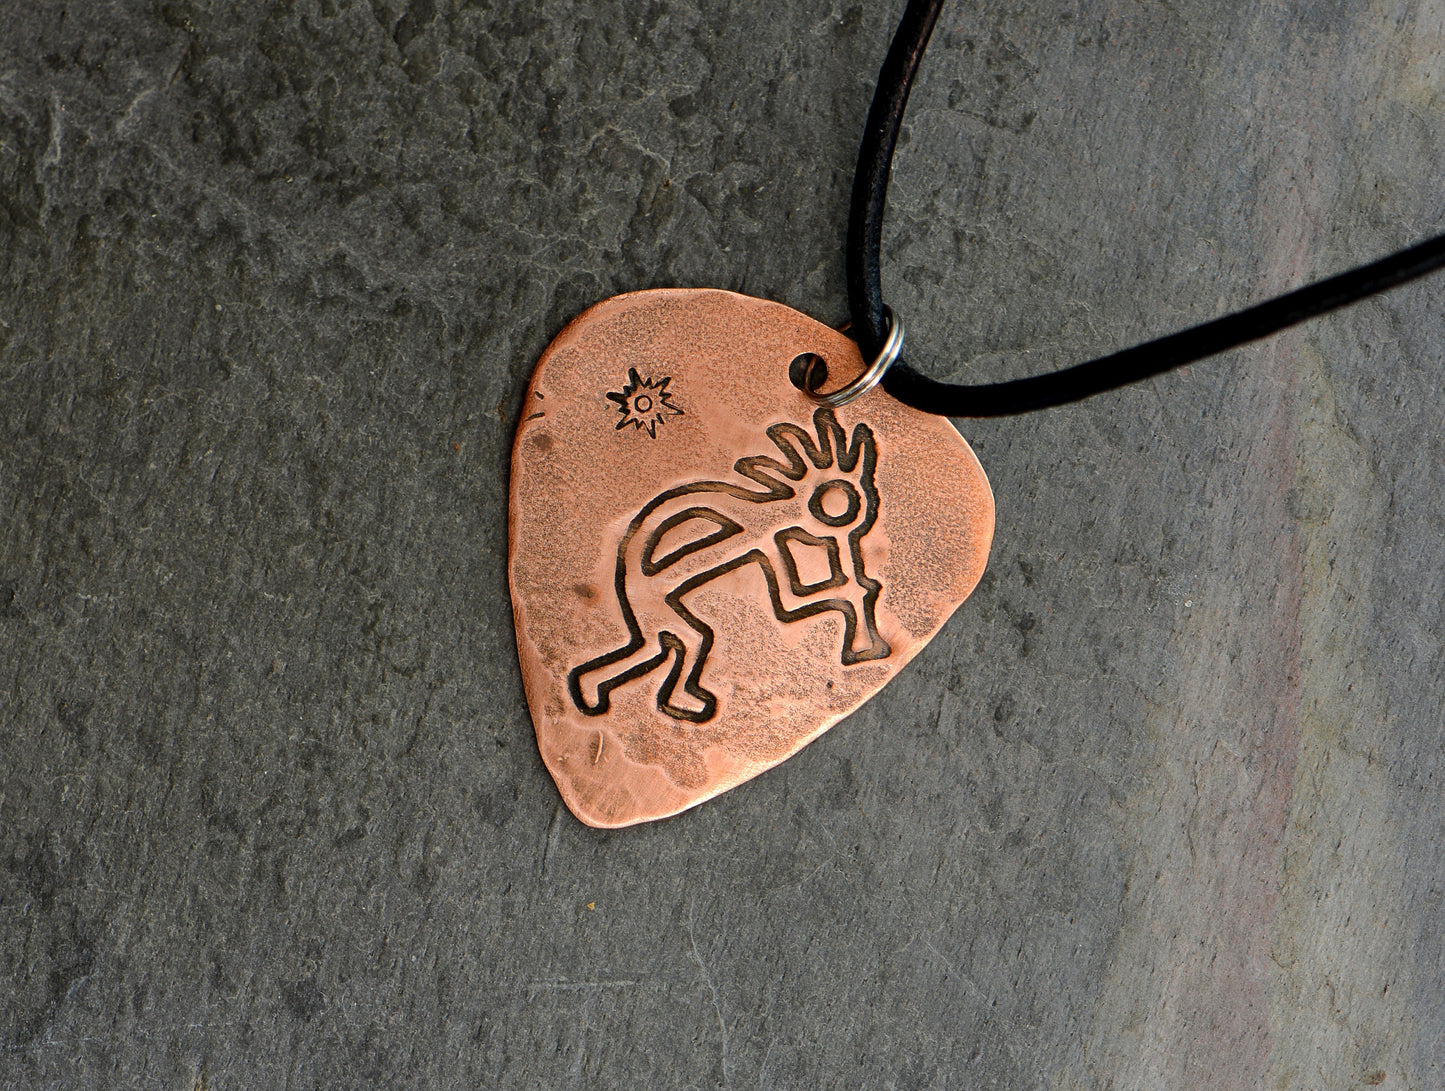 Kokopelli themed copper guitar pick necklace